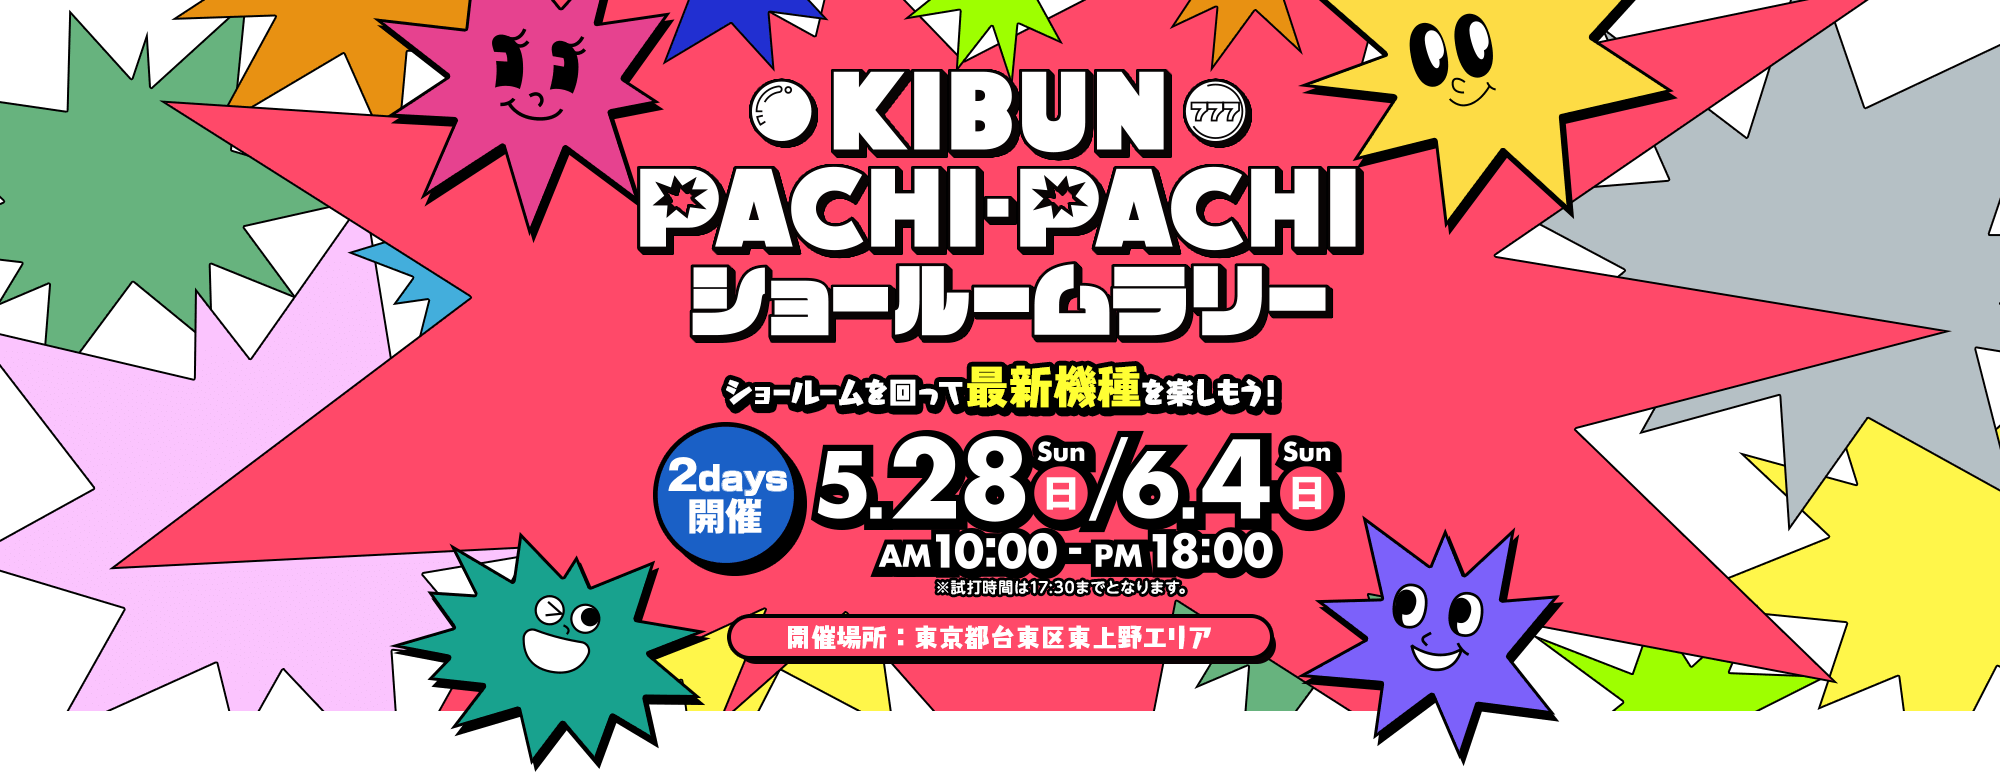 KIBUN PACHI-PACHI ショールームラリー ショールームを回って最新機種を楽しもう！5.28SUN/6.4SUNAM10:00-PM18:00